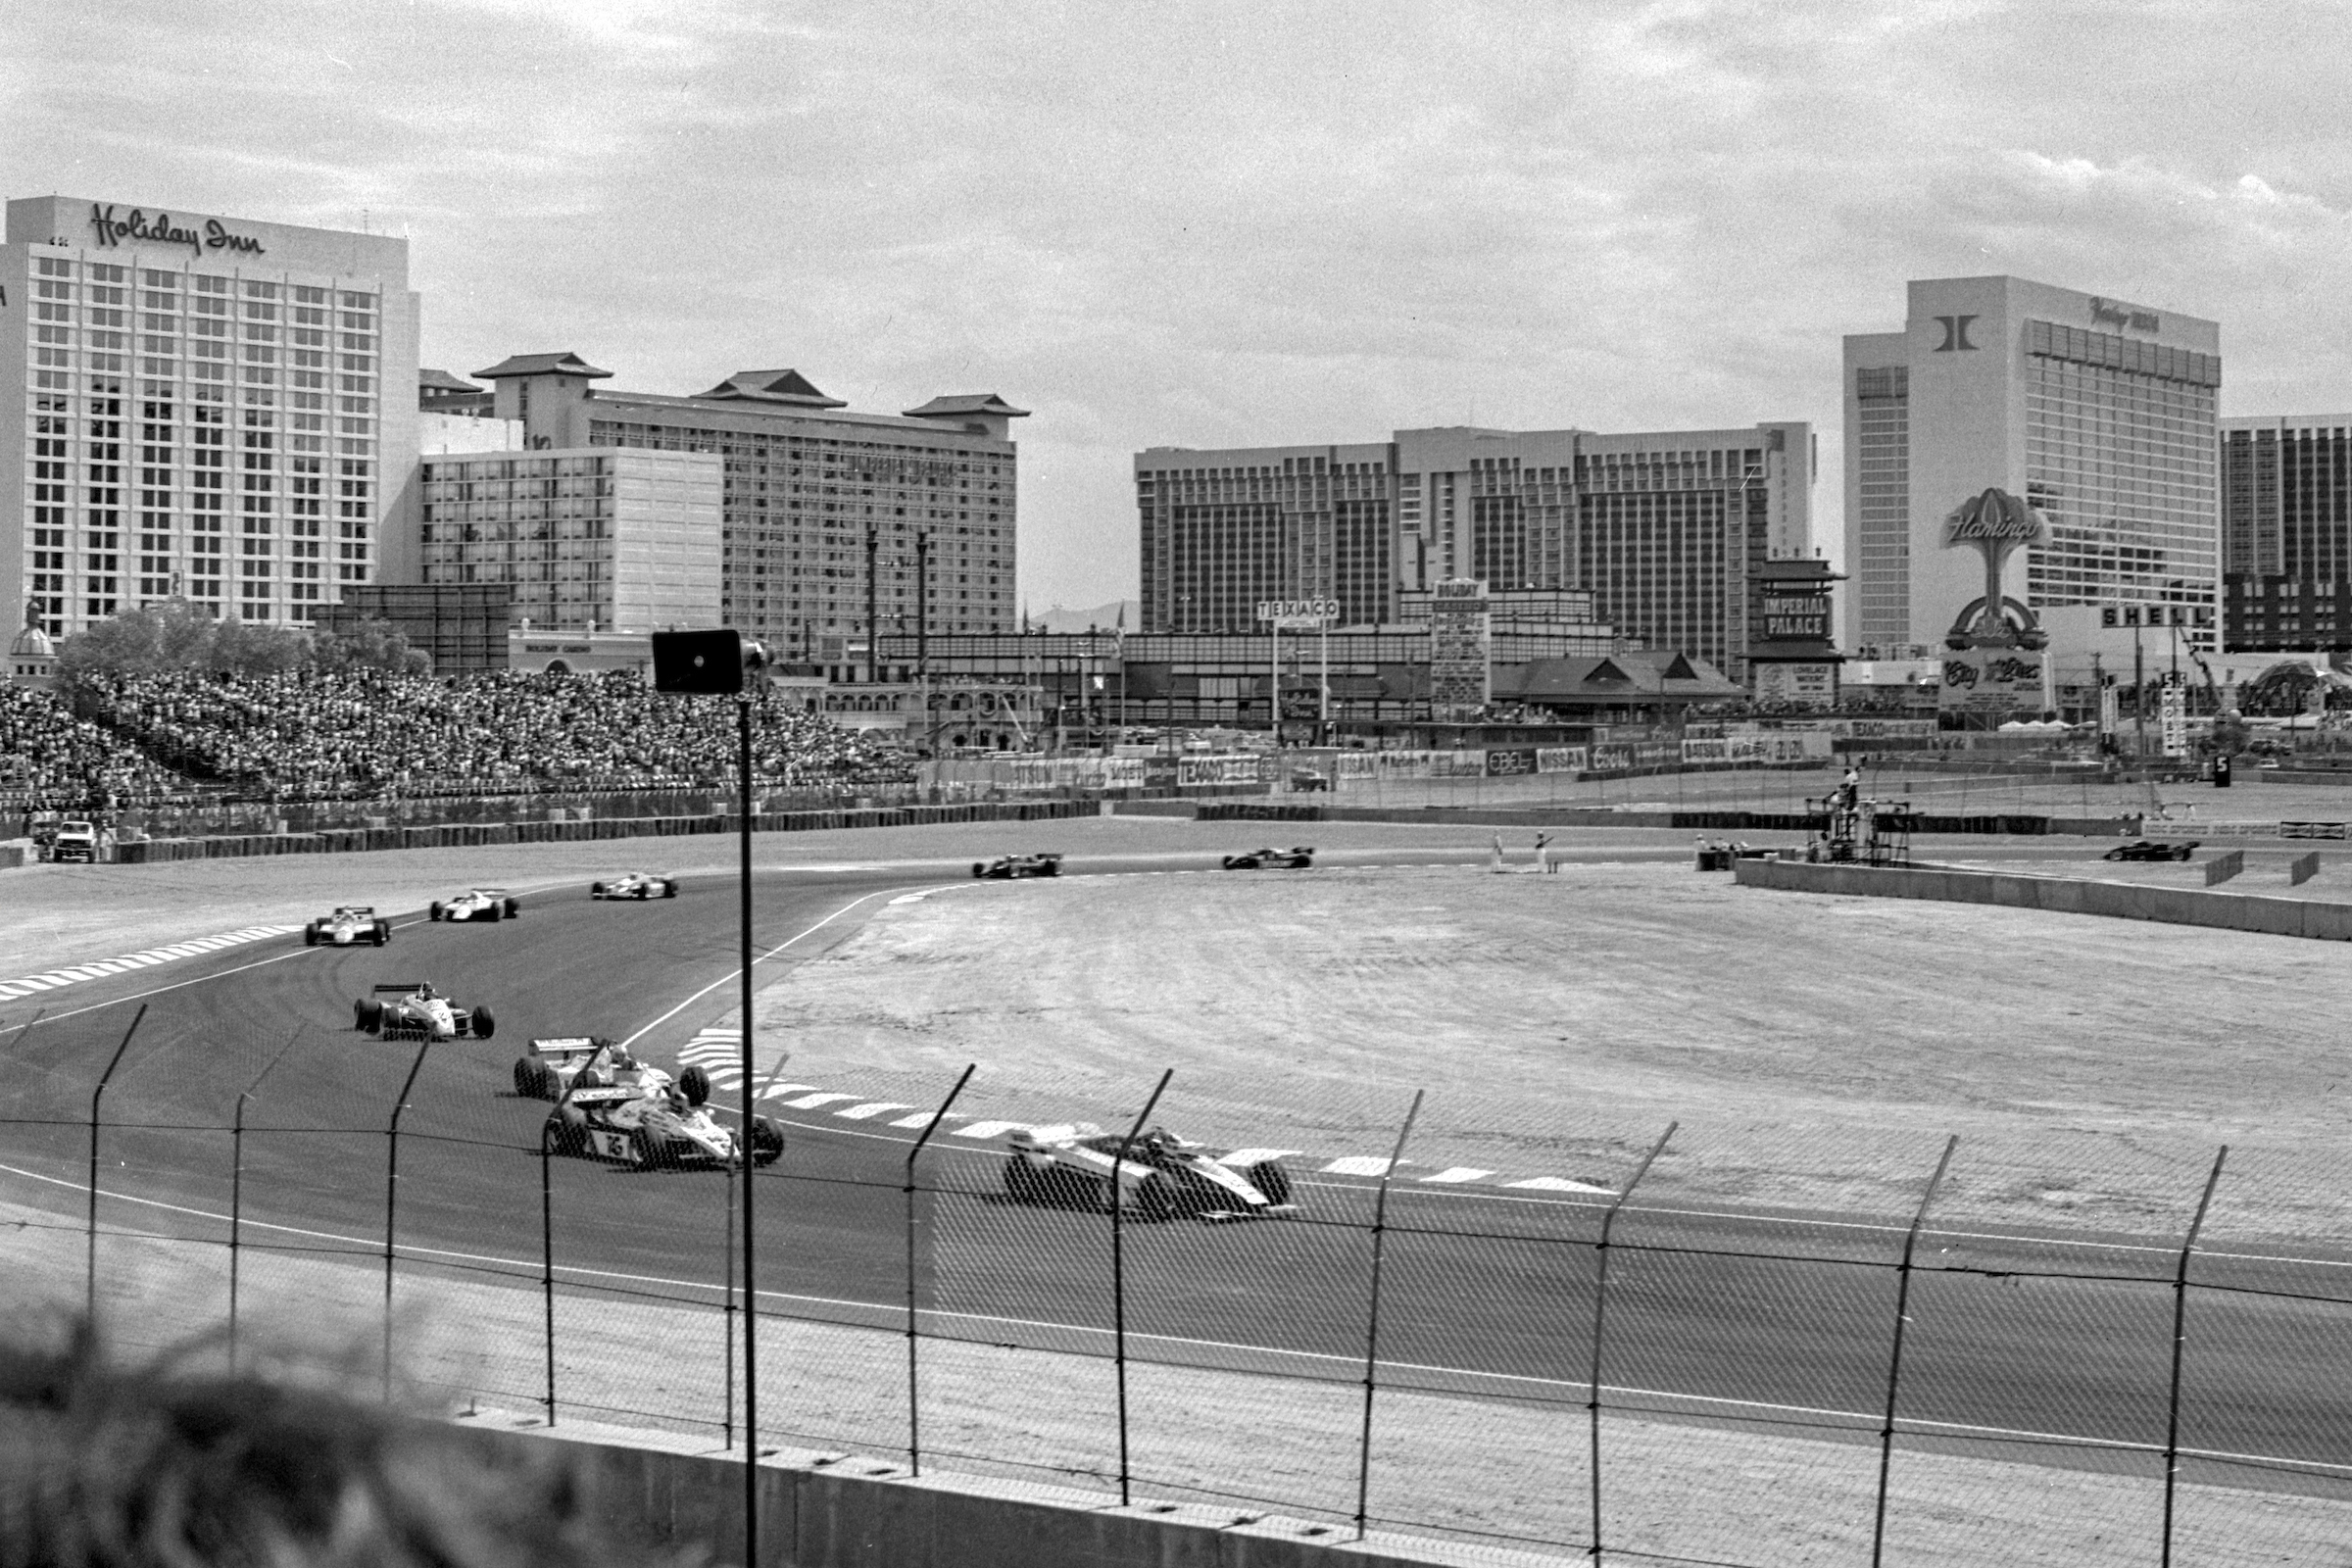 F1 Grand Prix Las Vegas - Caesars Palace